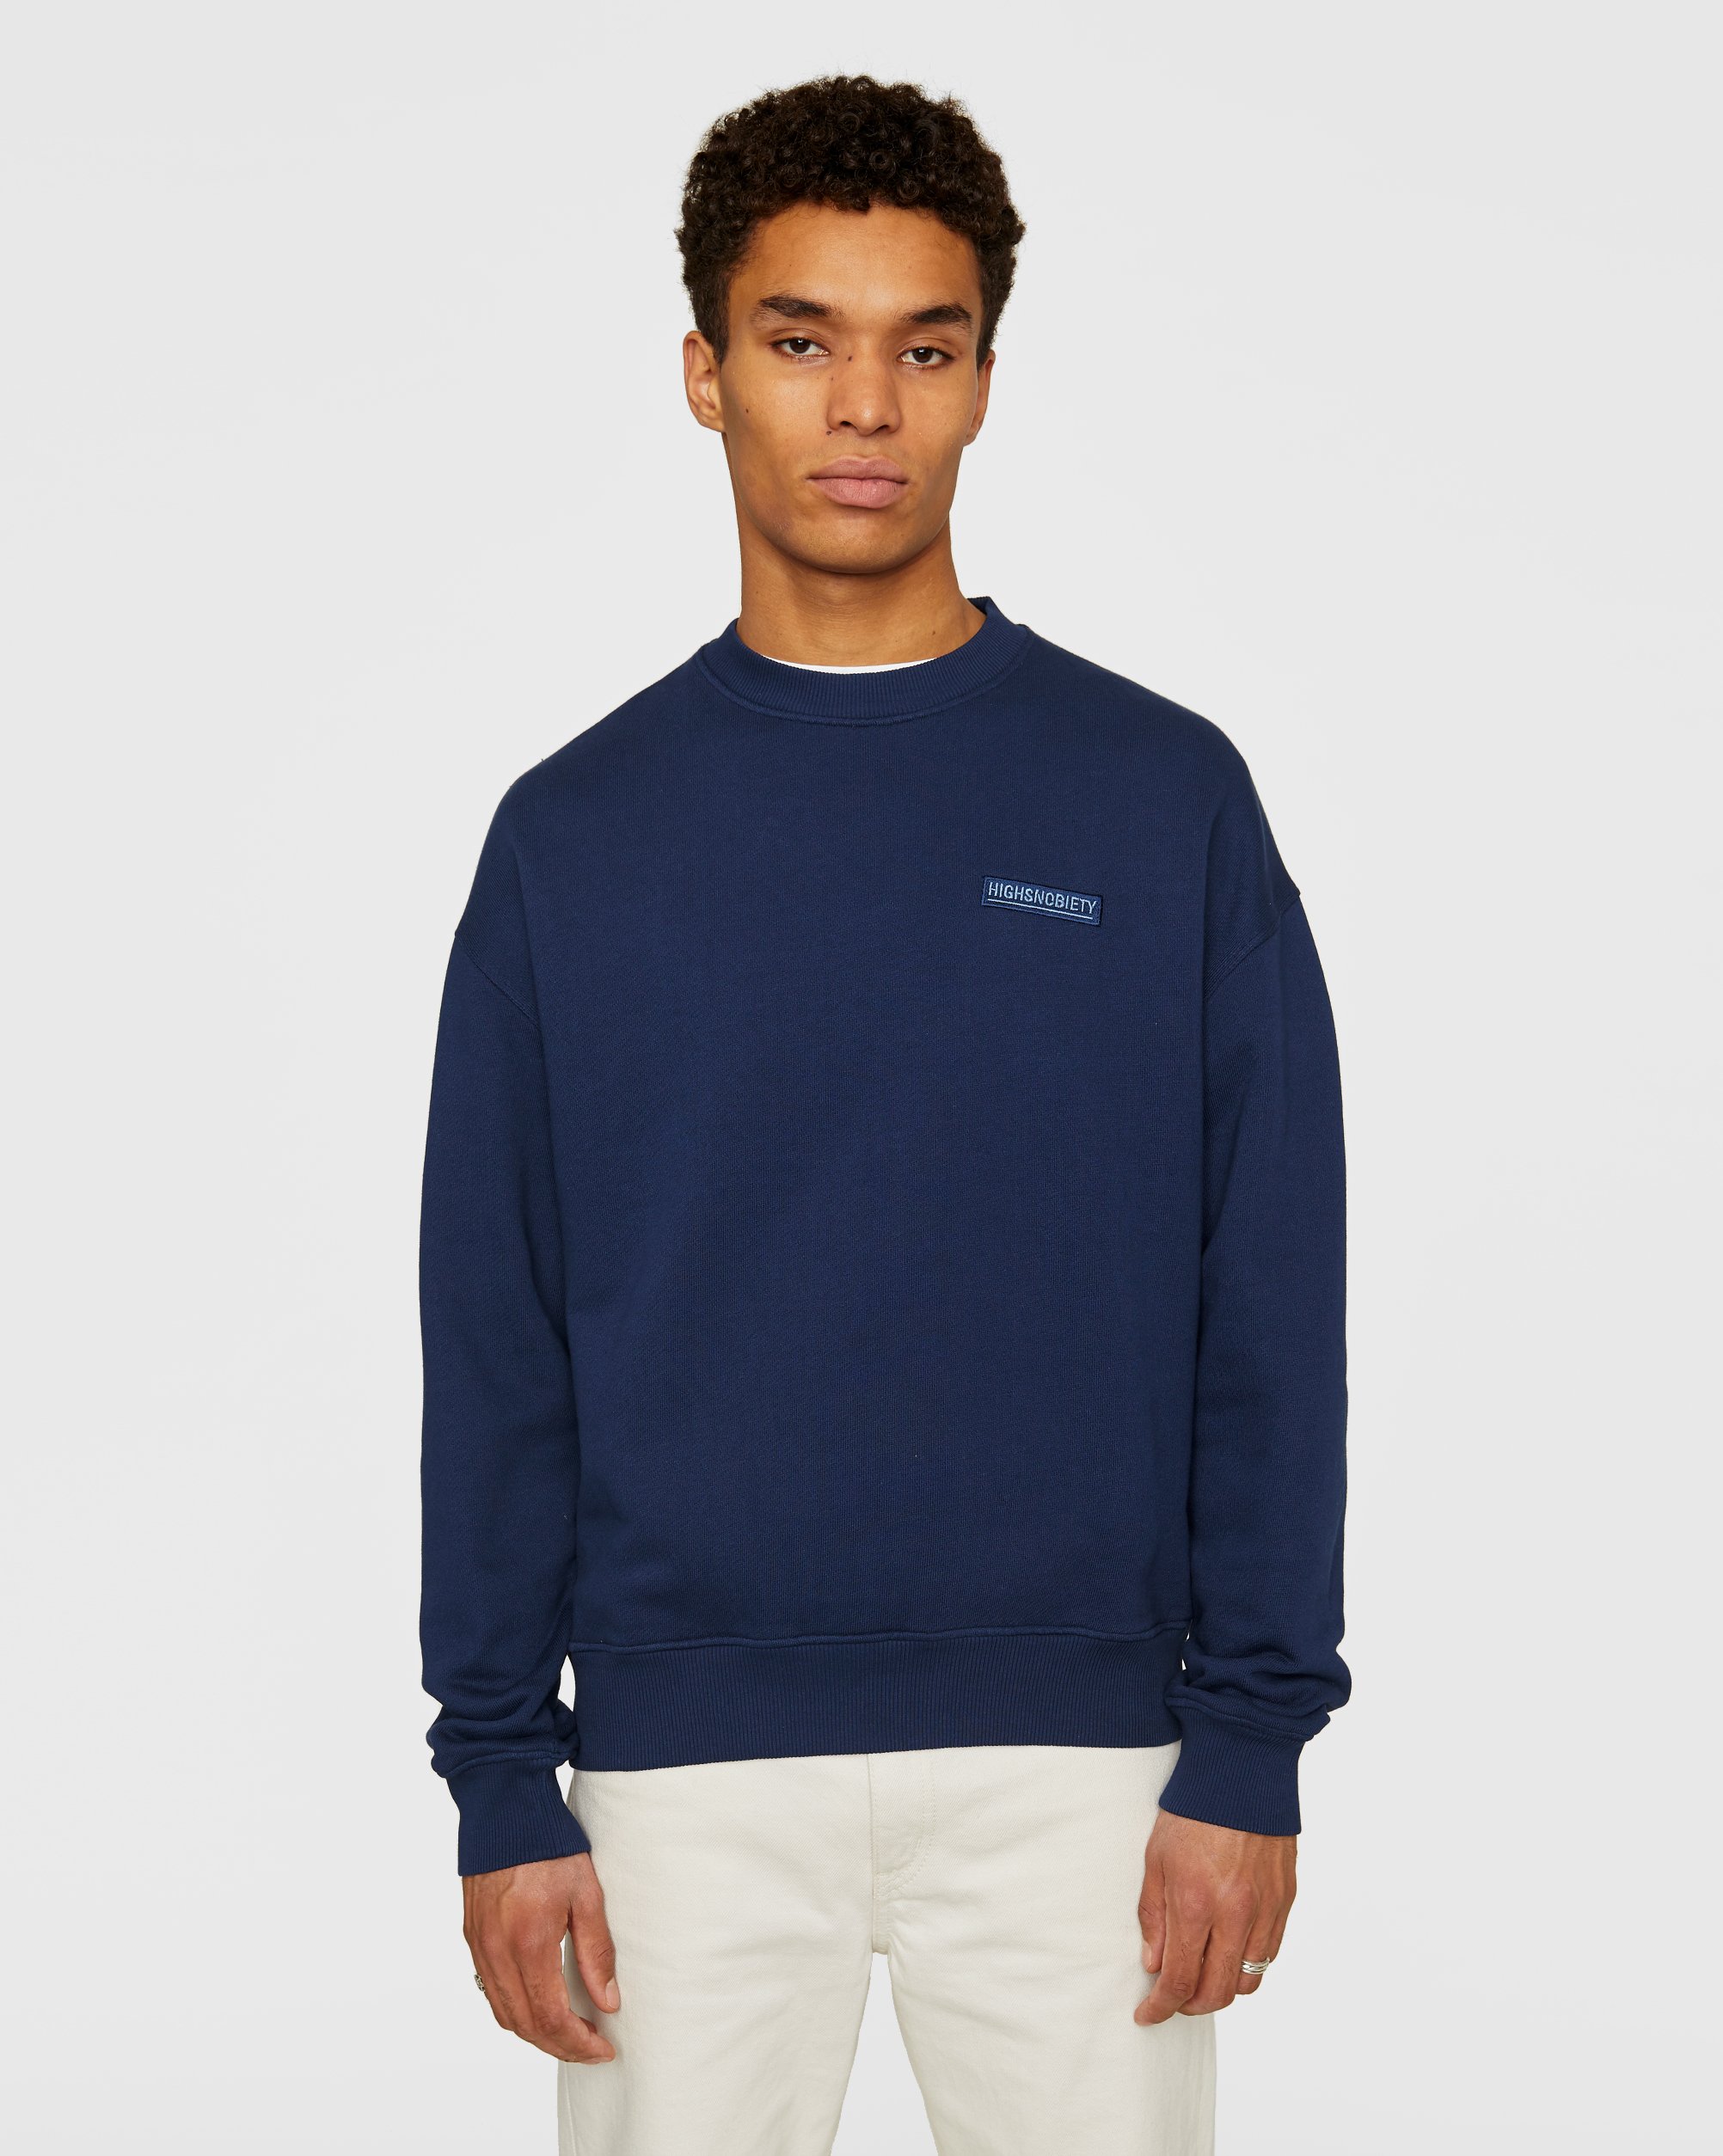 Highsnobiety - Staples Sweatshirt Navy - Clothing - Blue - Image 2